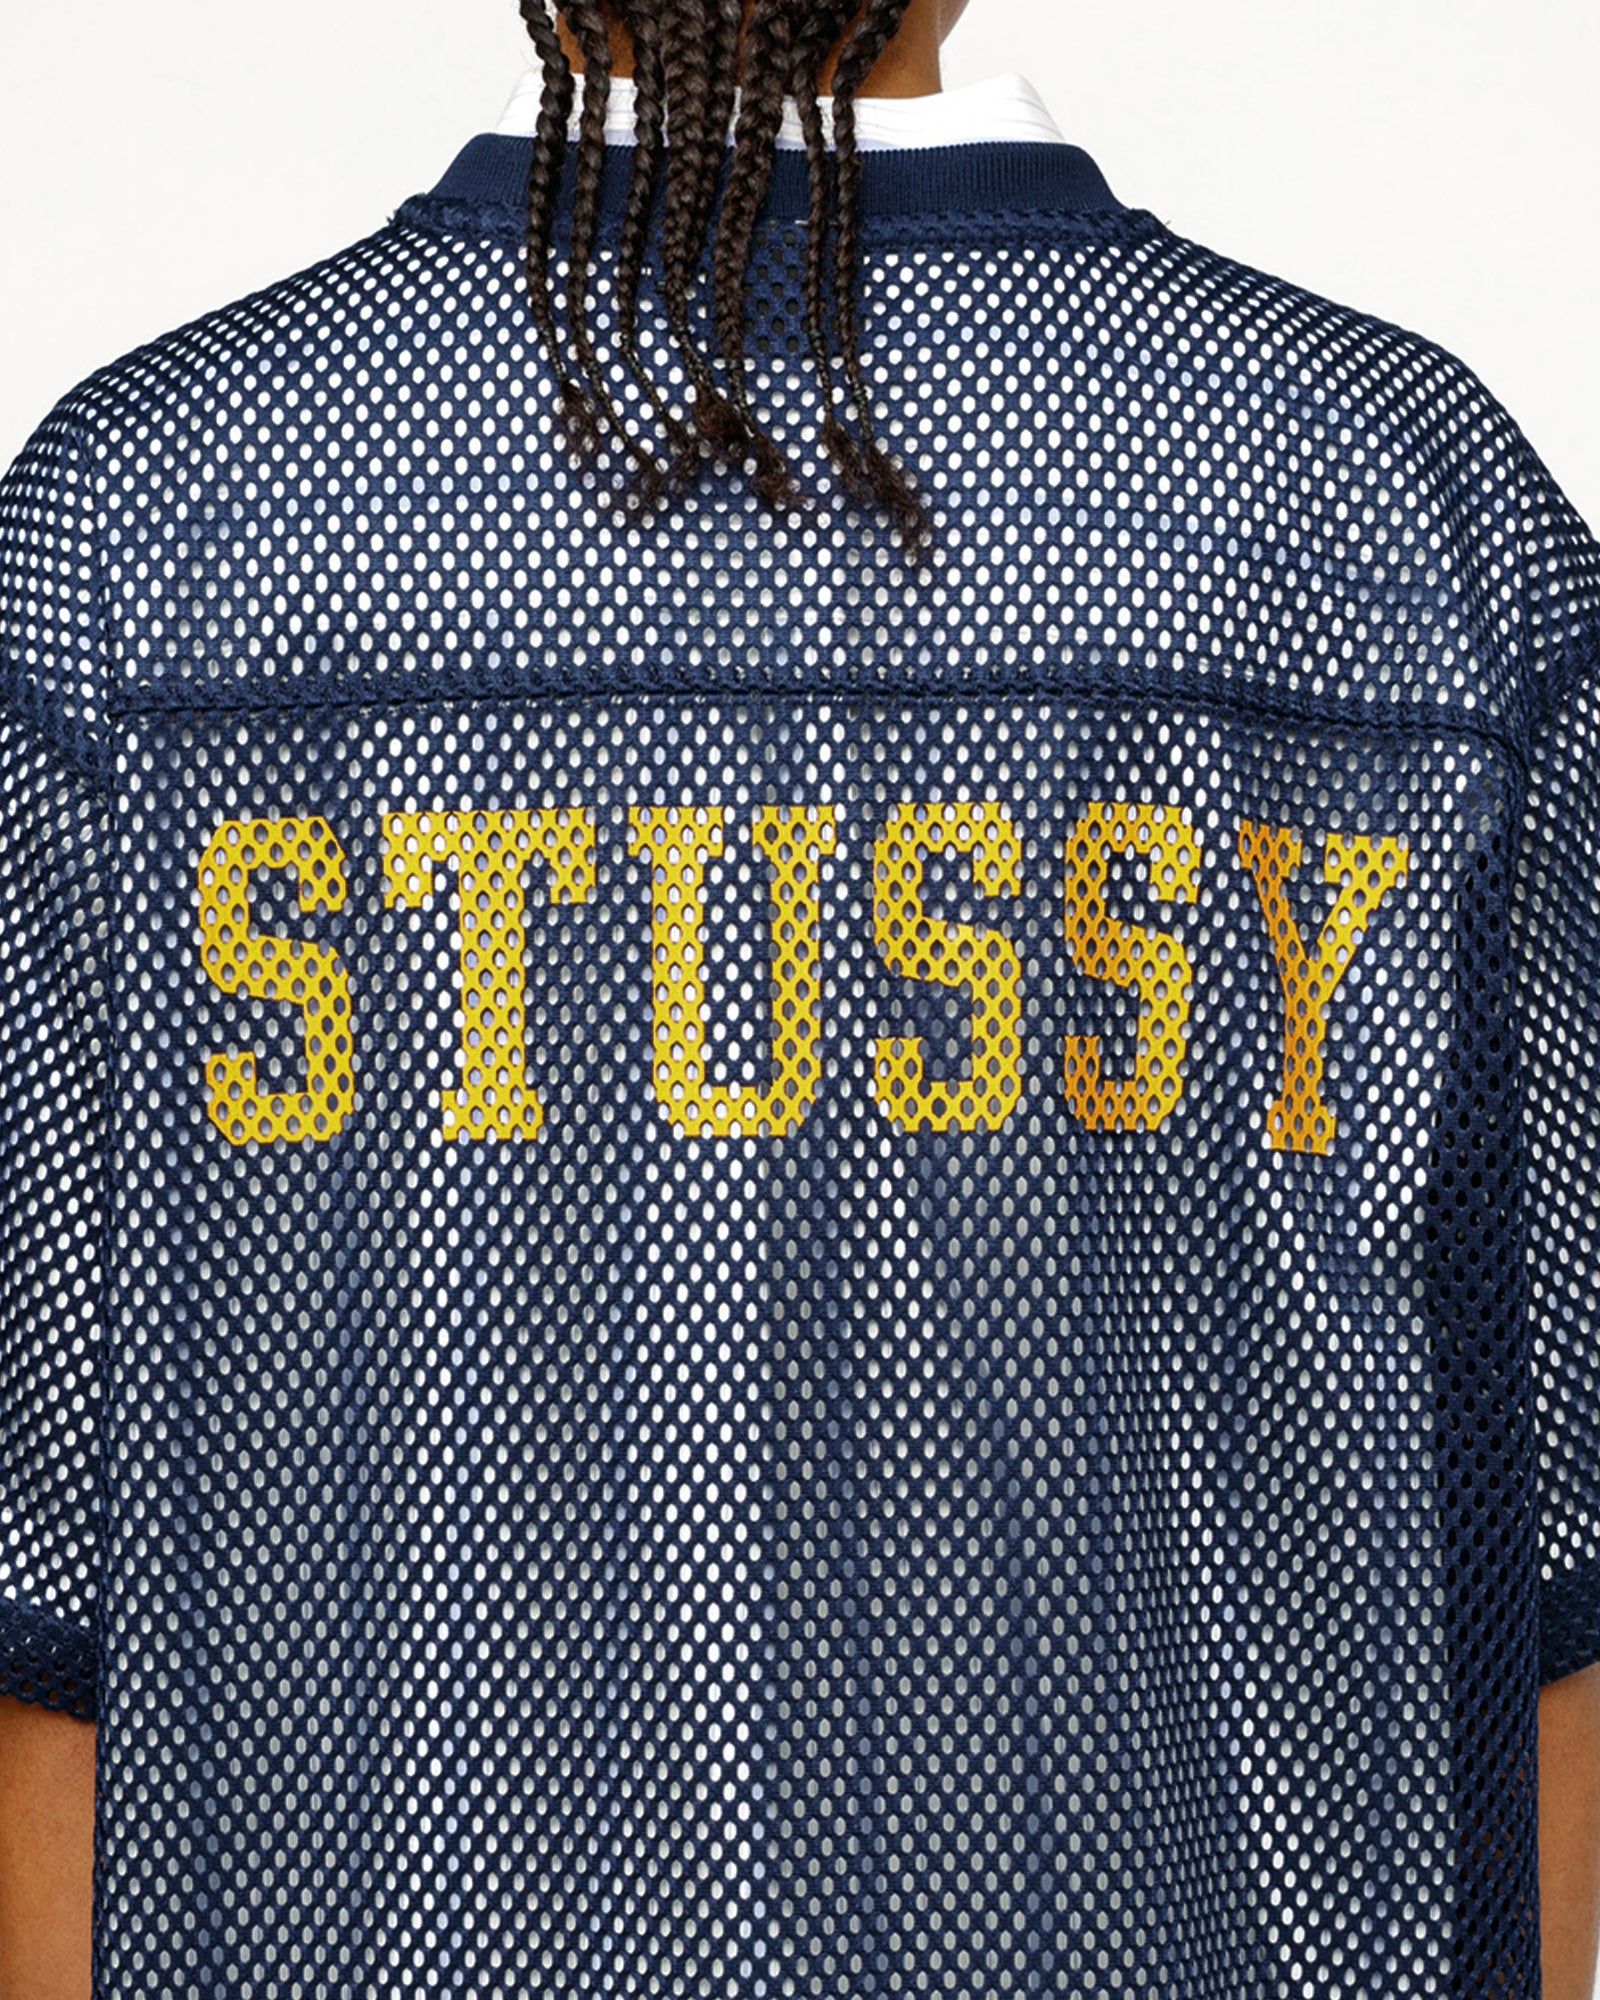 Stüssy Team Jersey 80 Navy Tops